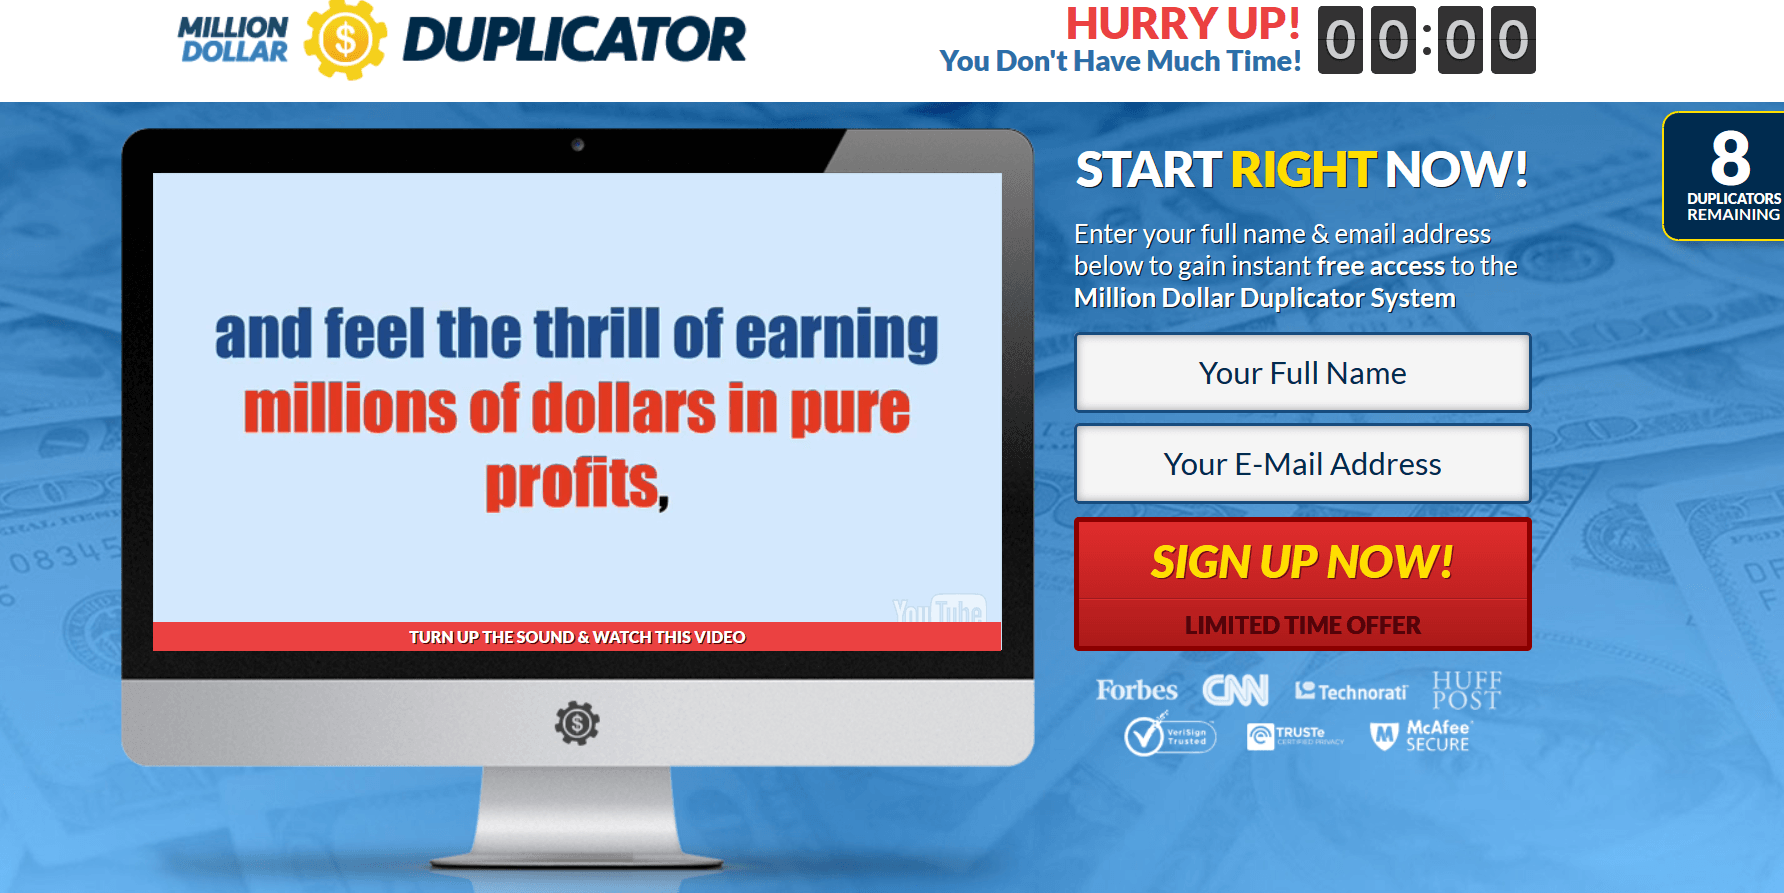 Million Dollar Duplicator is a scam